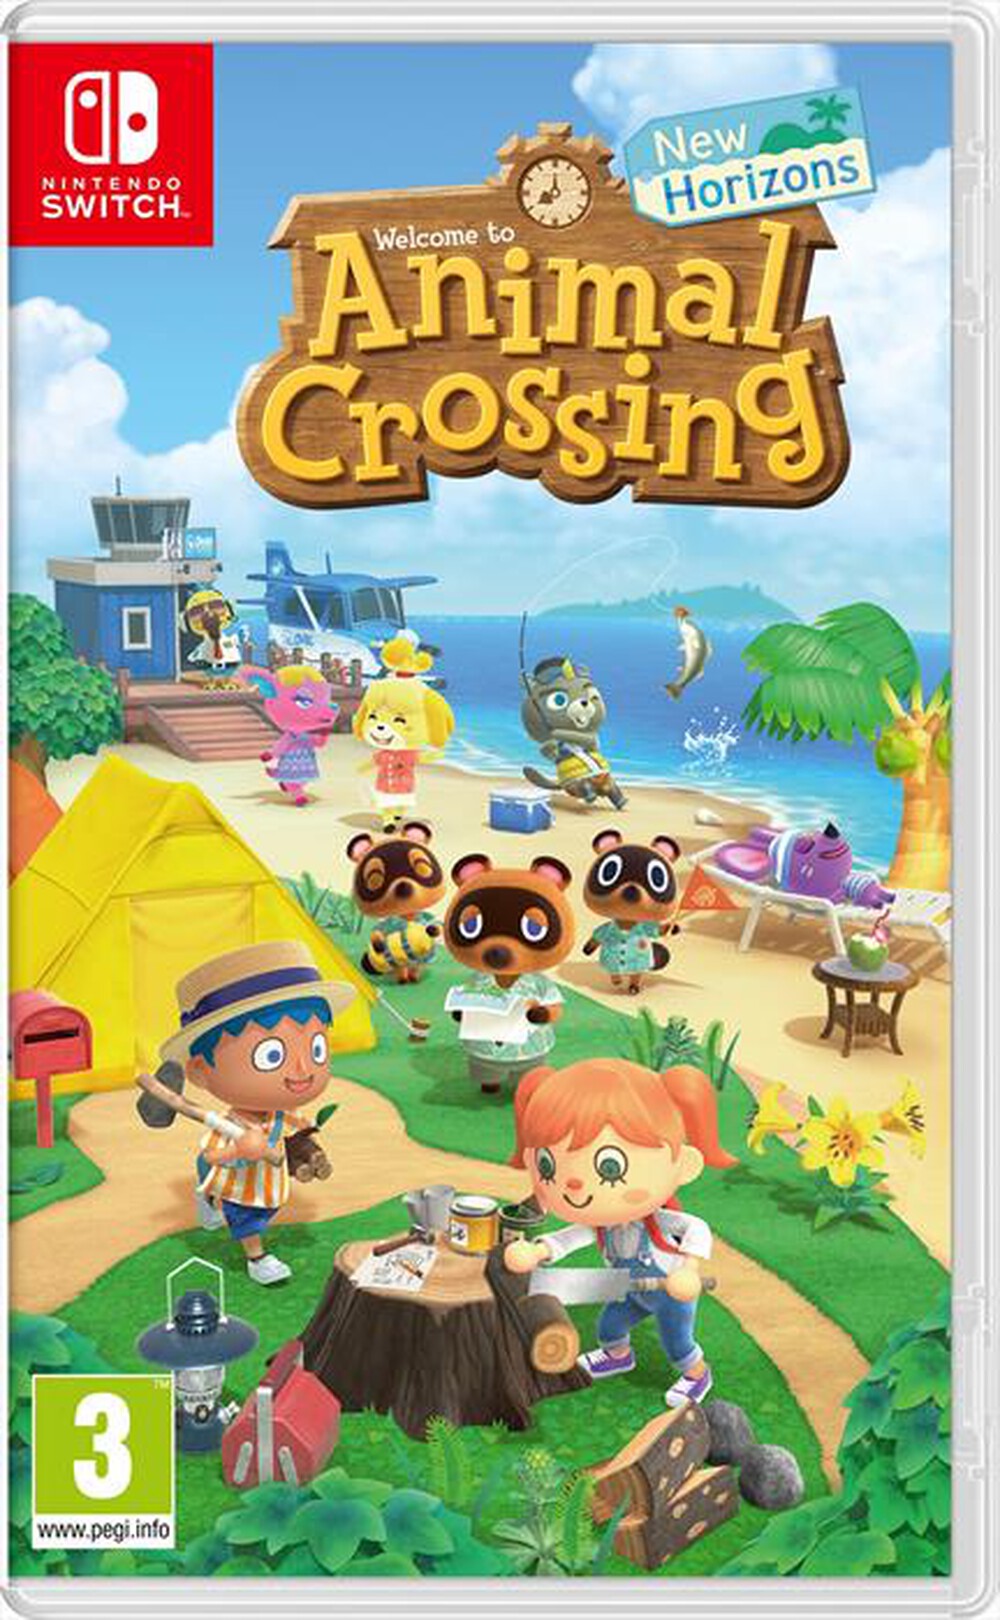 "NINTENDO - Animal Crossing: New Horizons"